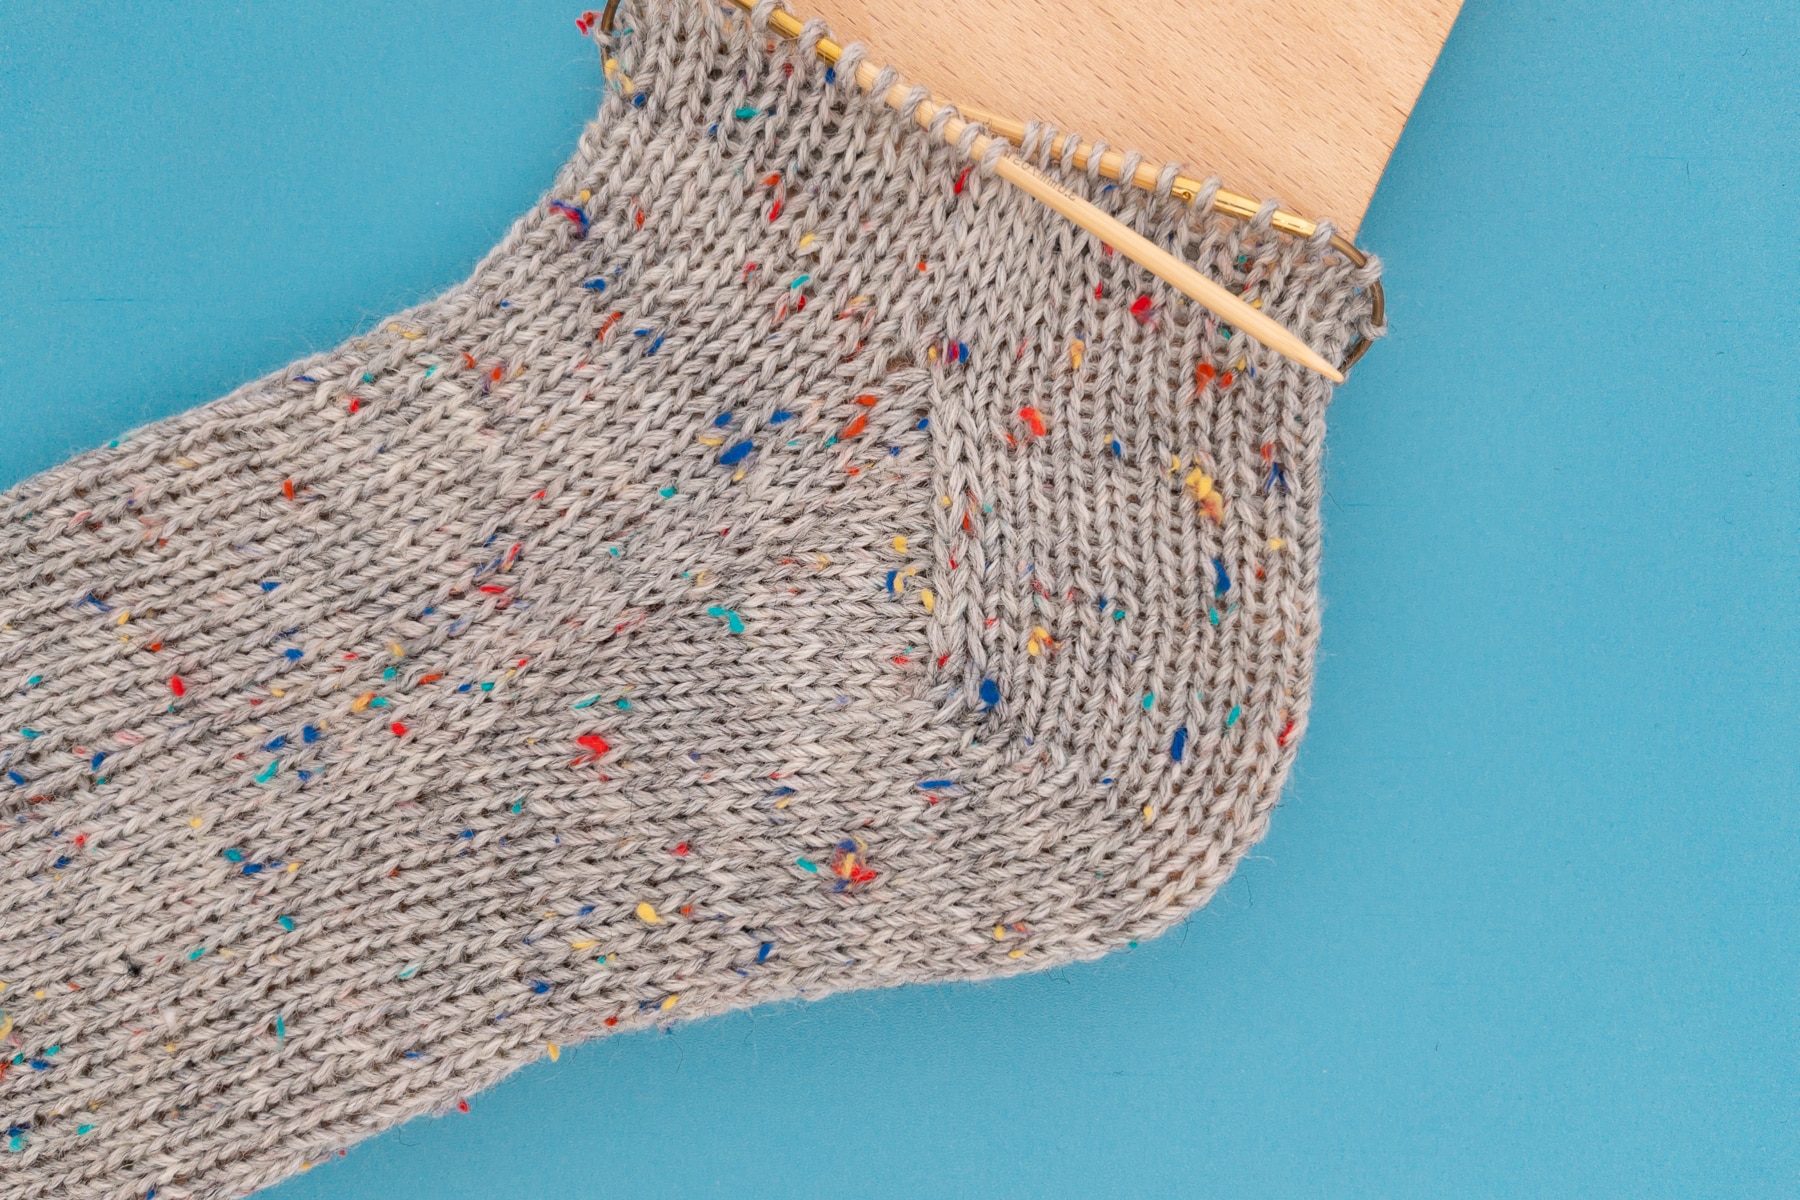 Knitting a Toe-Up Horseshoe Heel/Cap Heel with addiCraSyTrio, Needle Play or addiSock Wonder - free tutorial for beginners